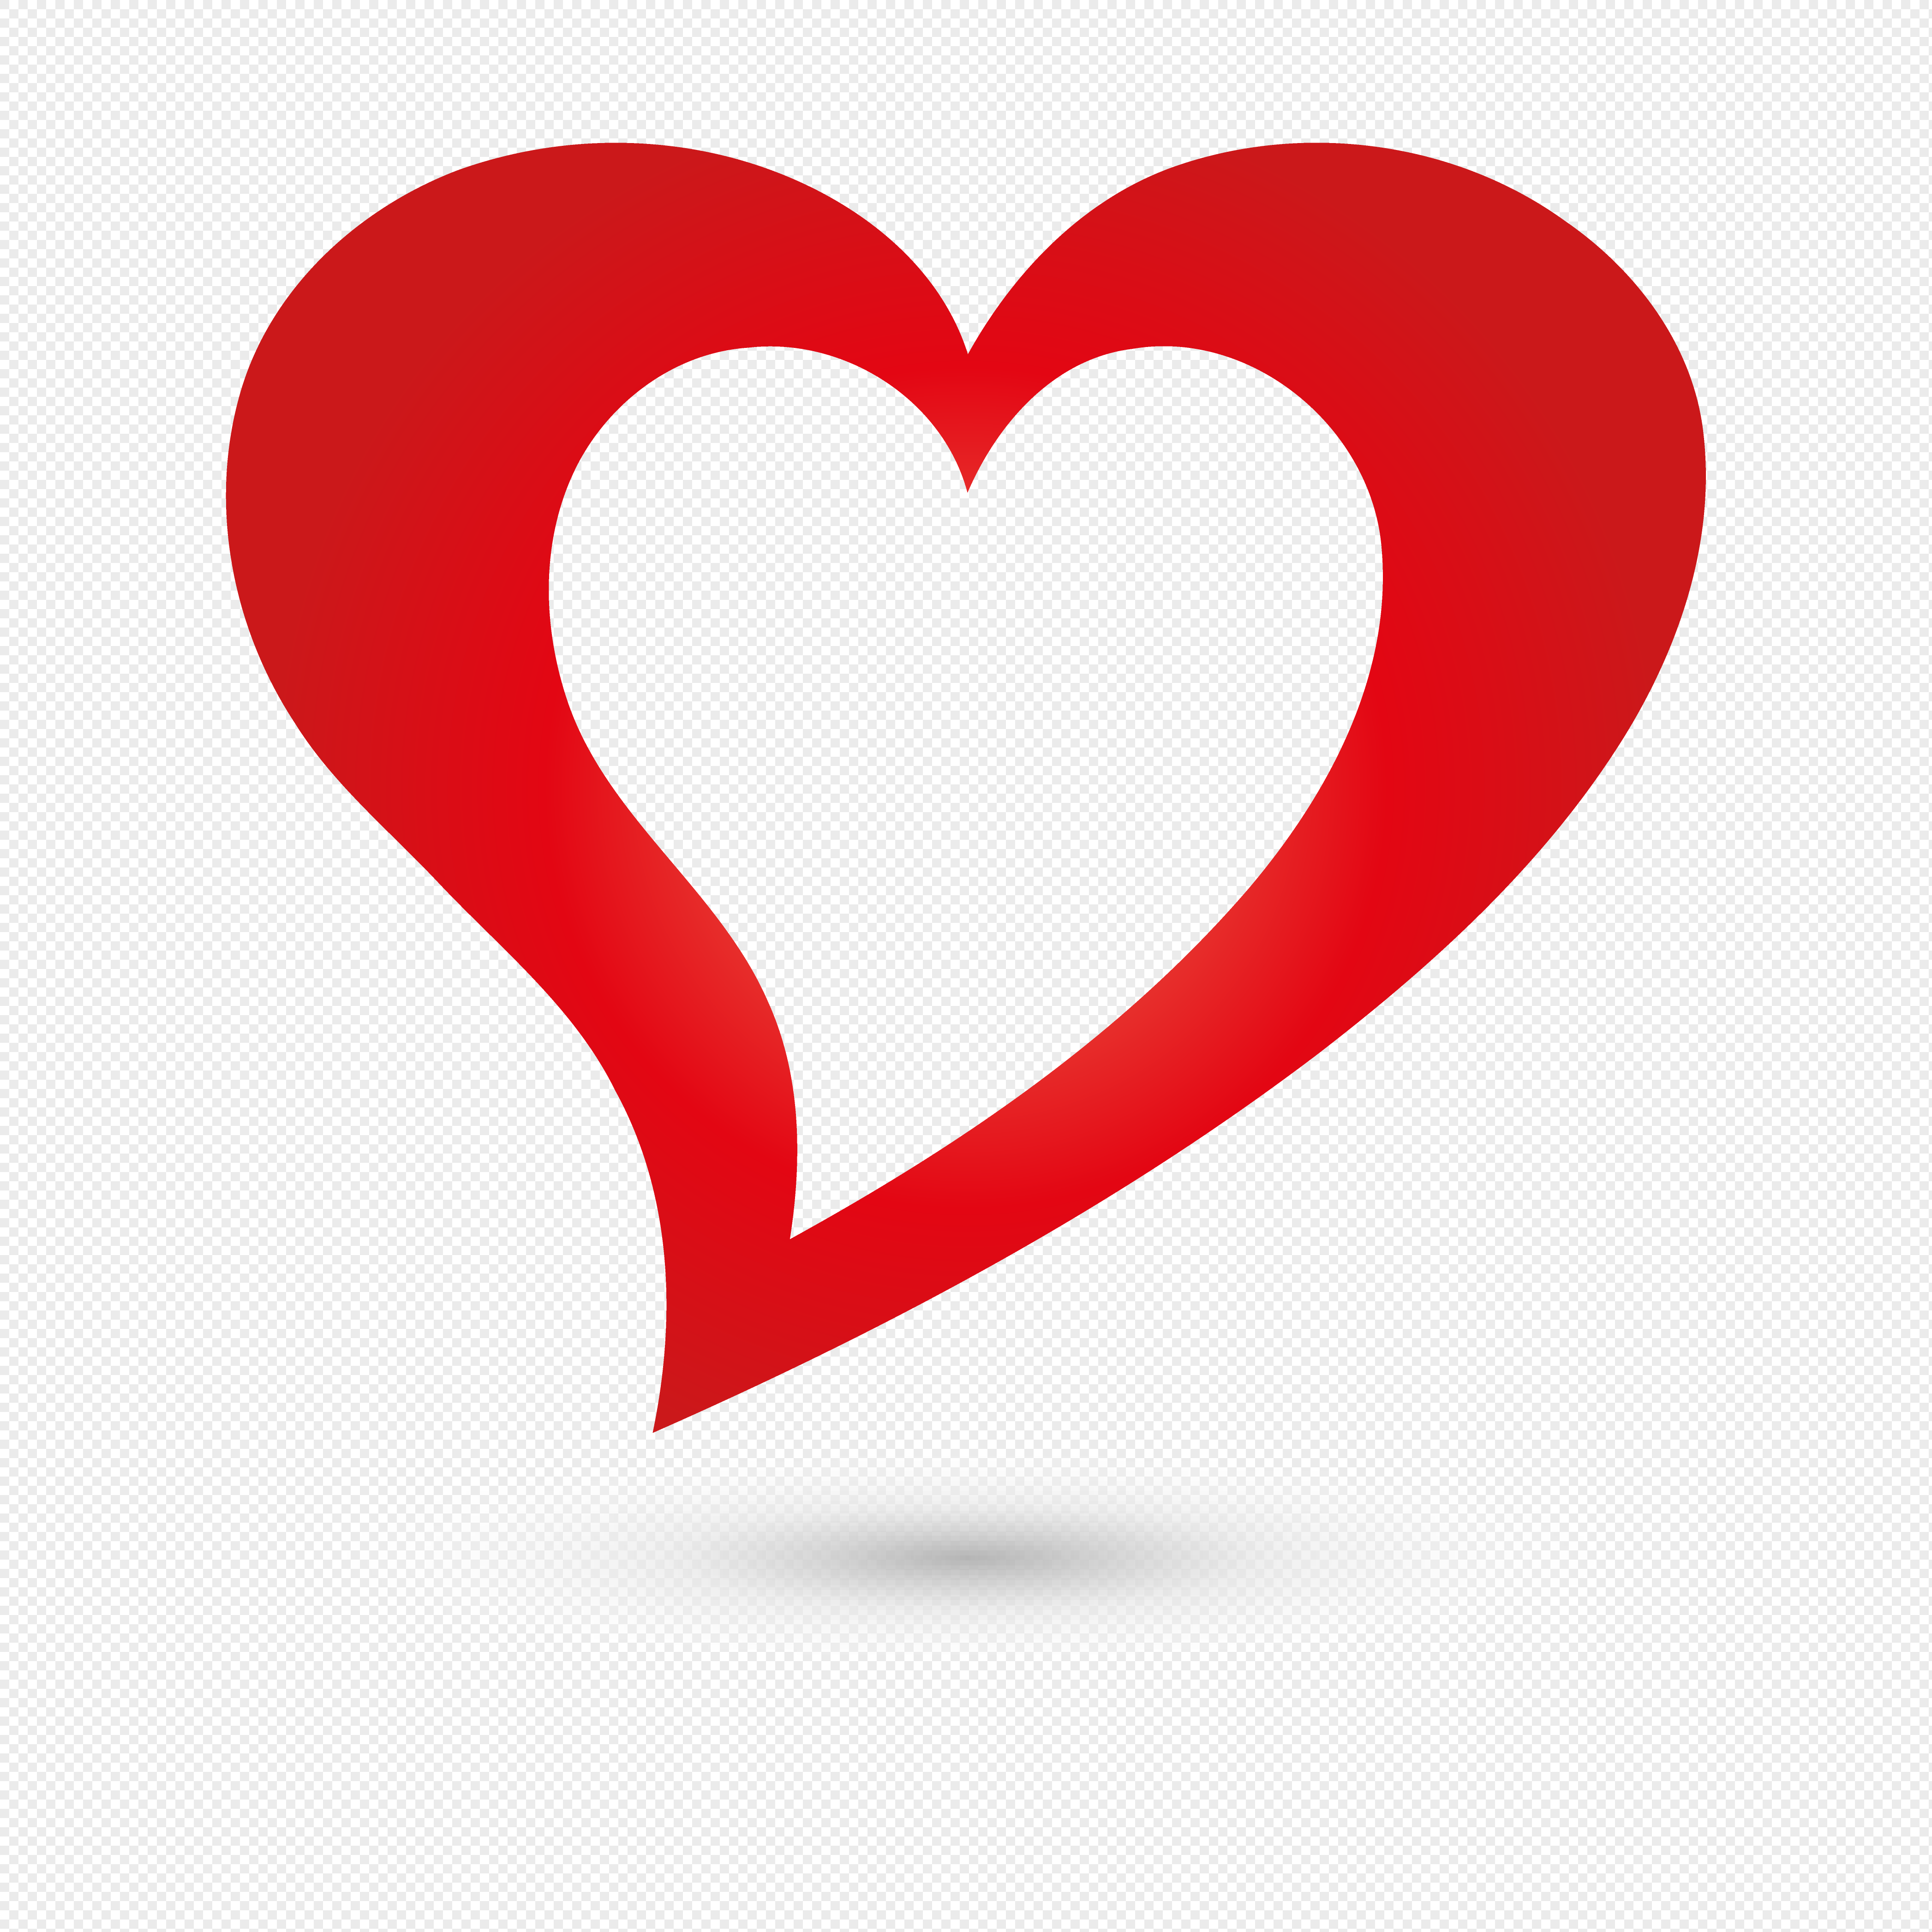 heart shape vector illustrator download